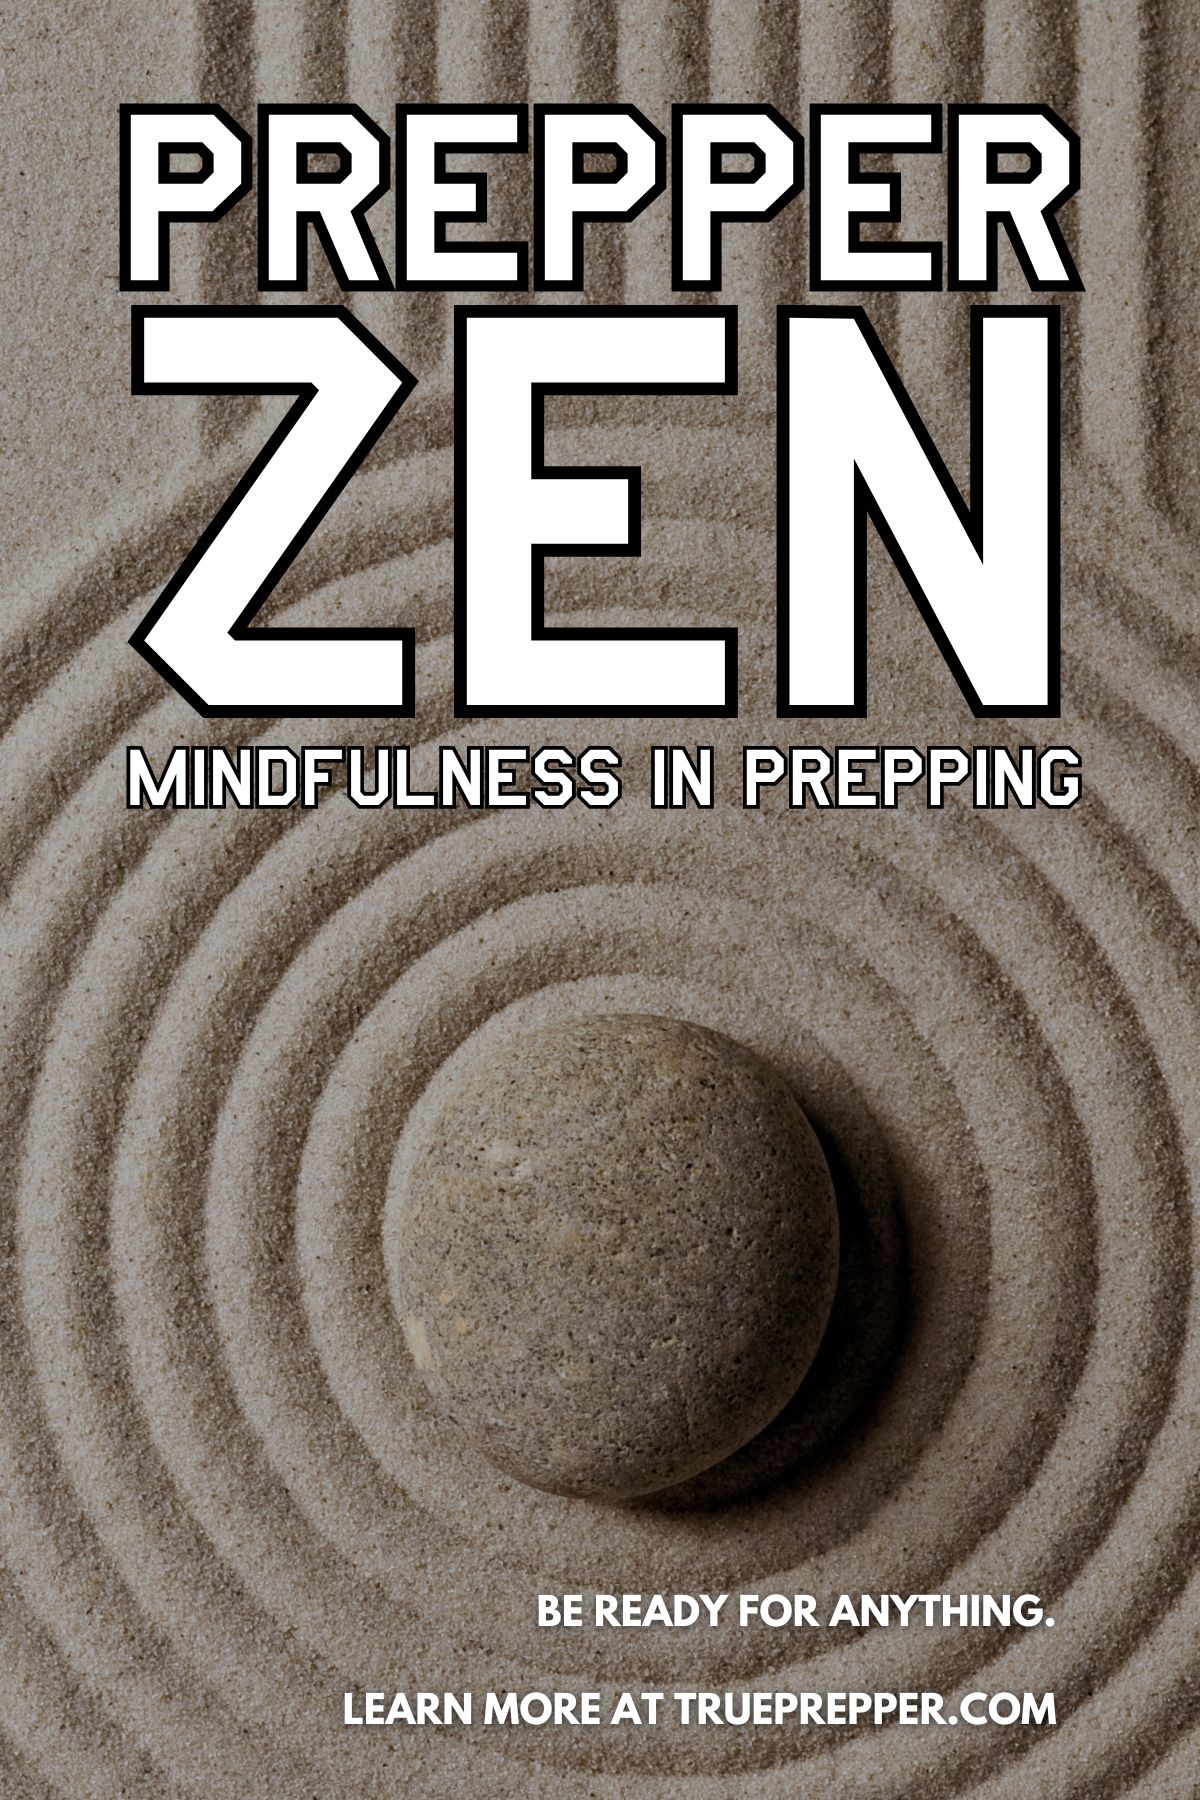 Prepper Zen